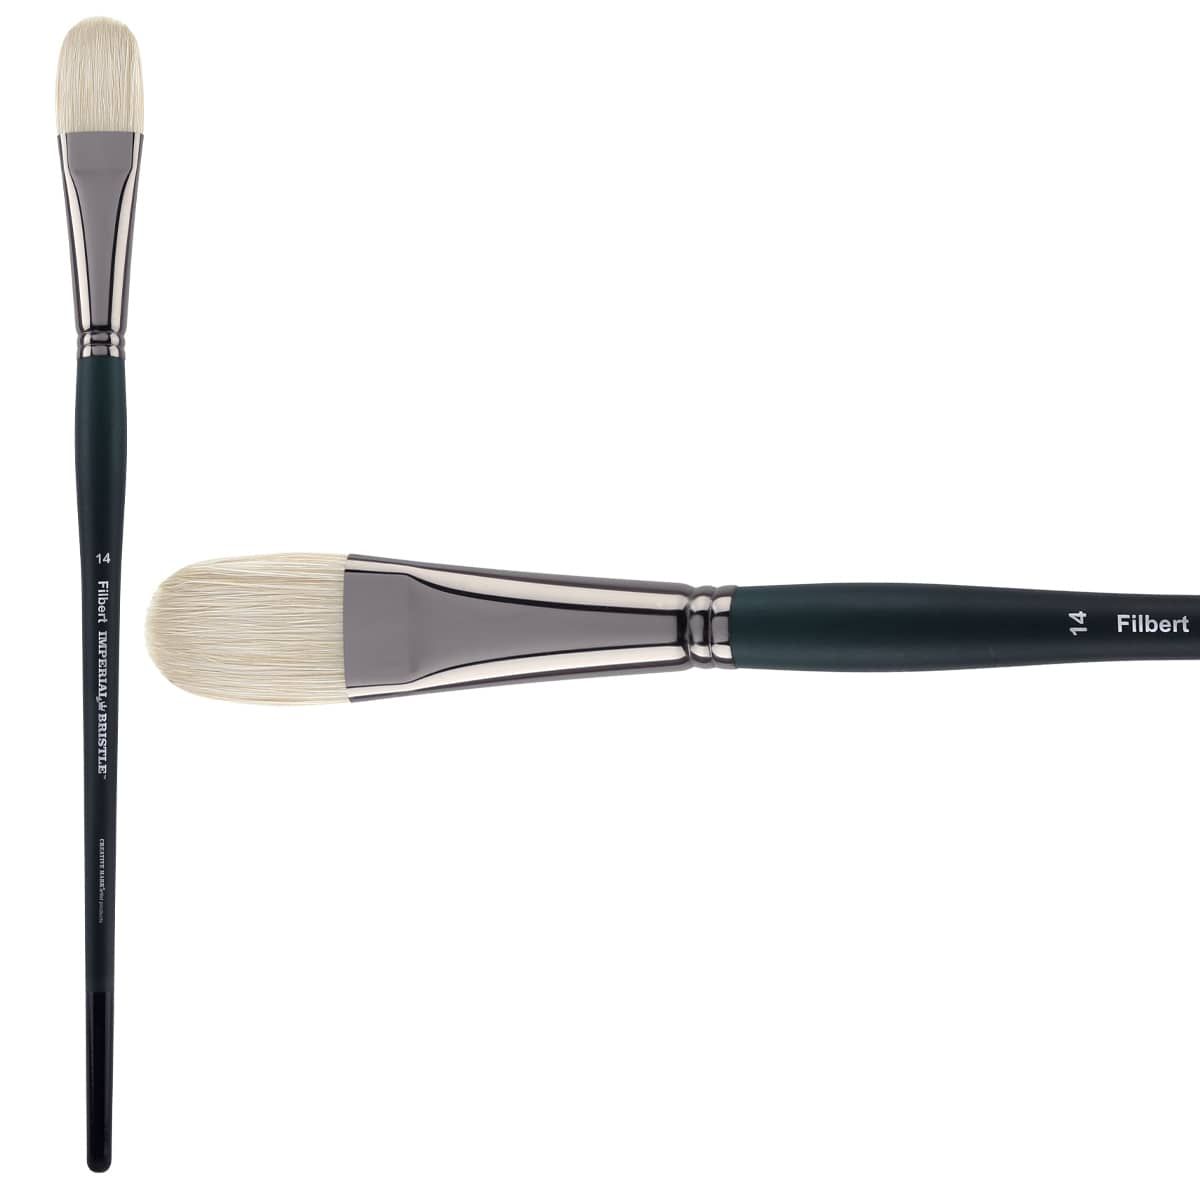 Imperial Professional Chungking Hog Bristle Brush, Filbert Size #14